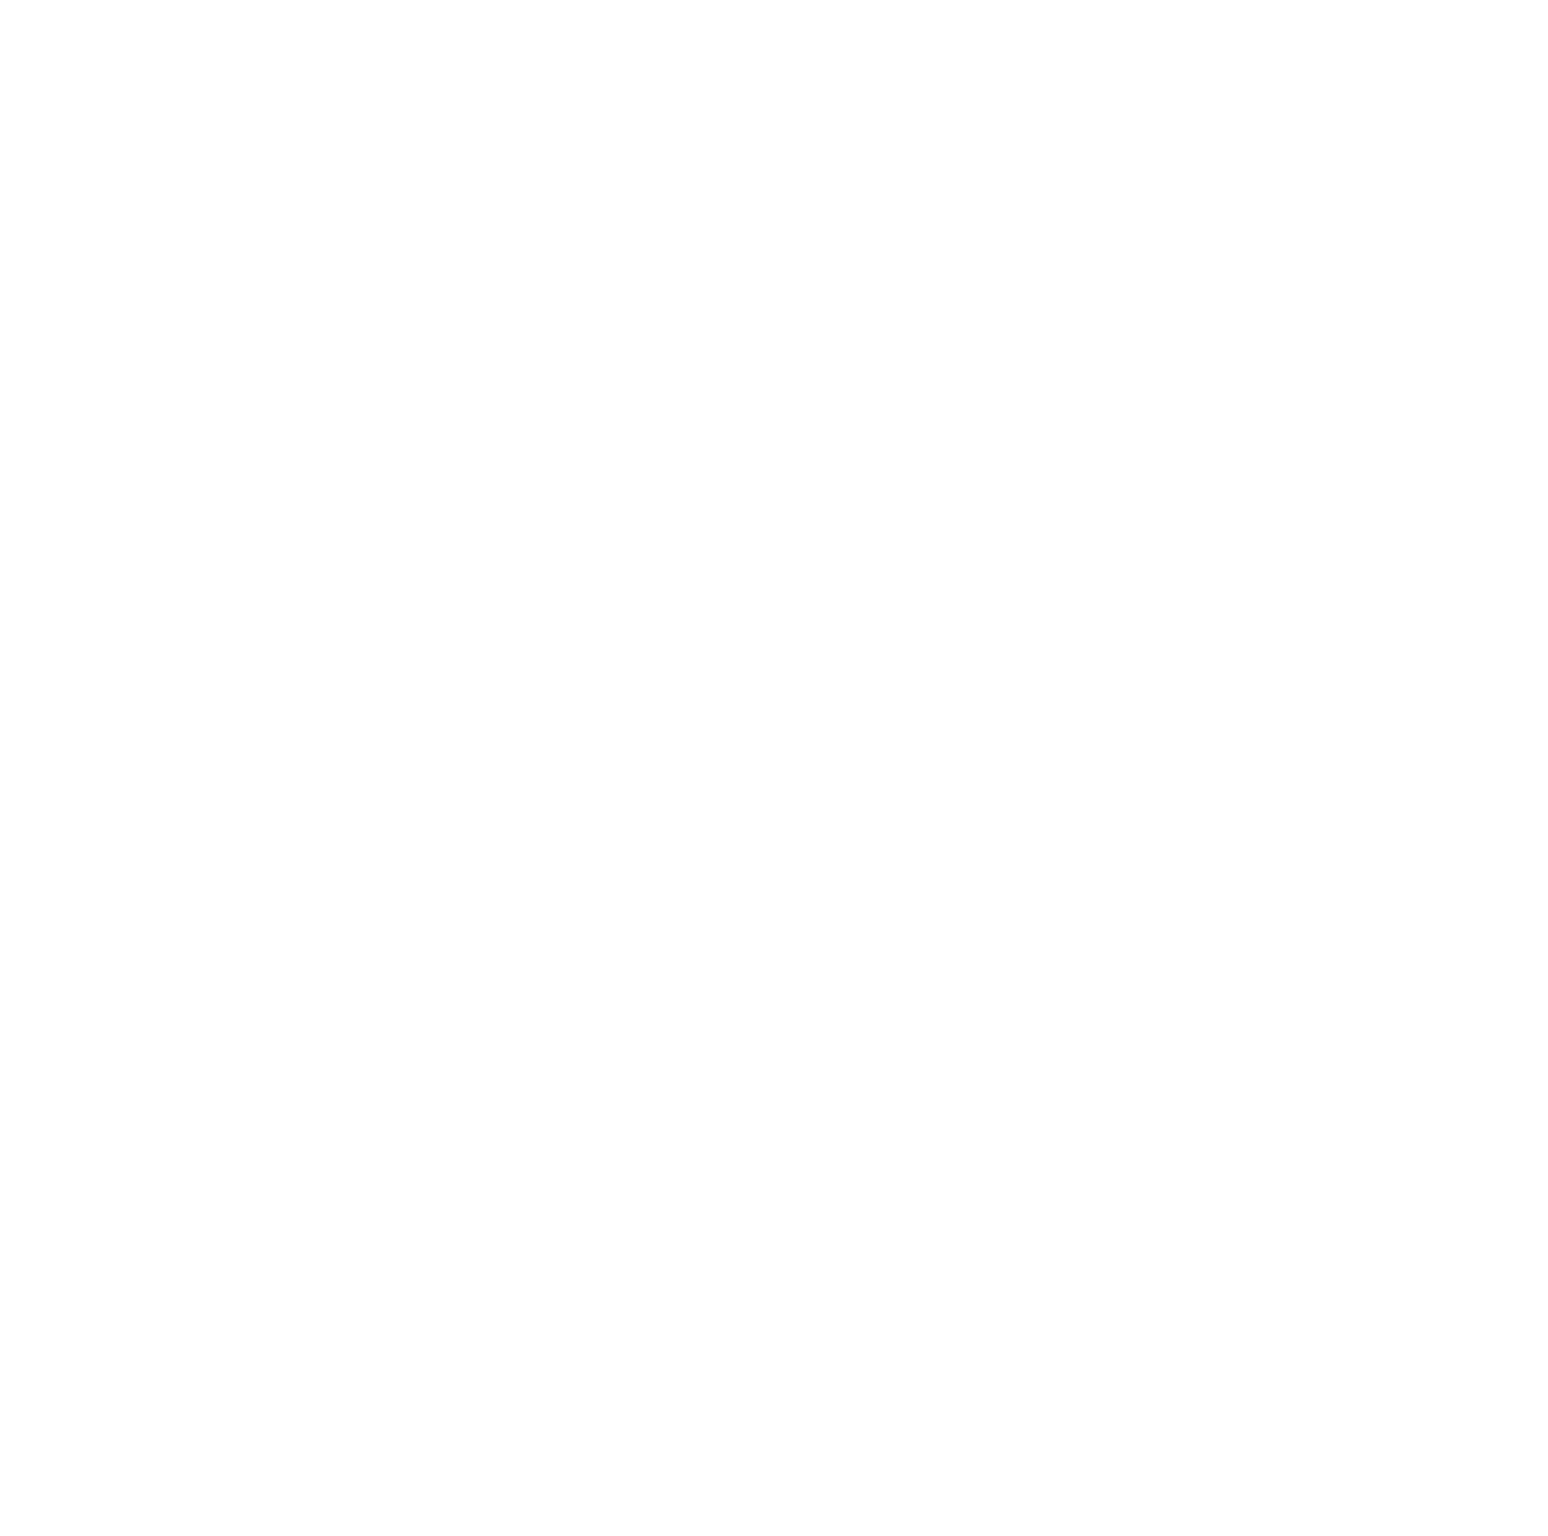 Ford health ISO accreditation logo